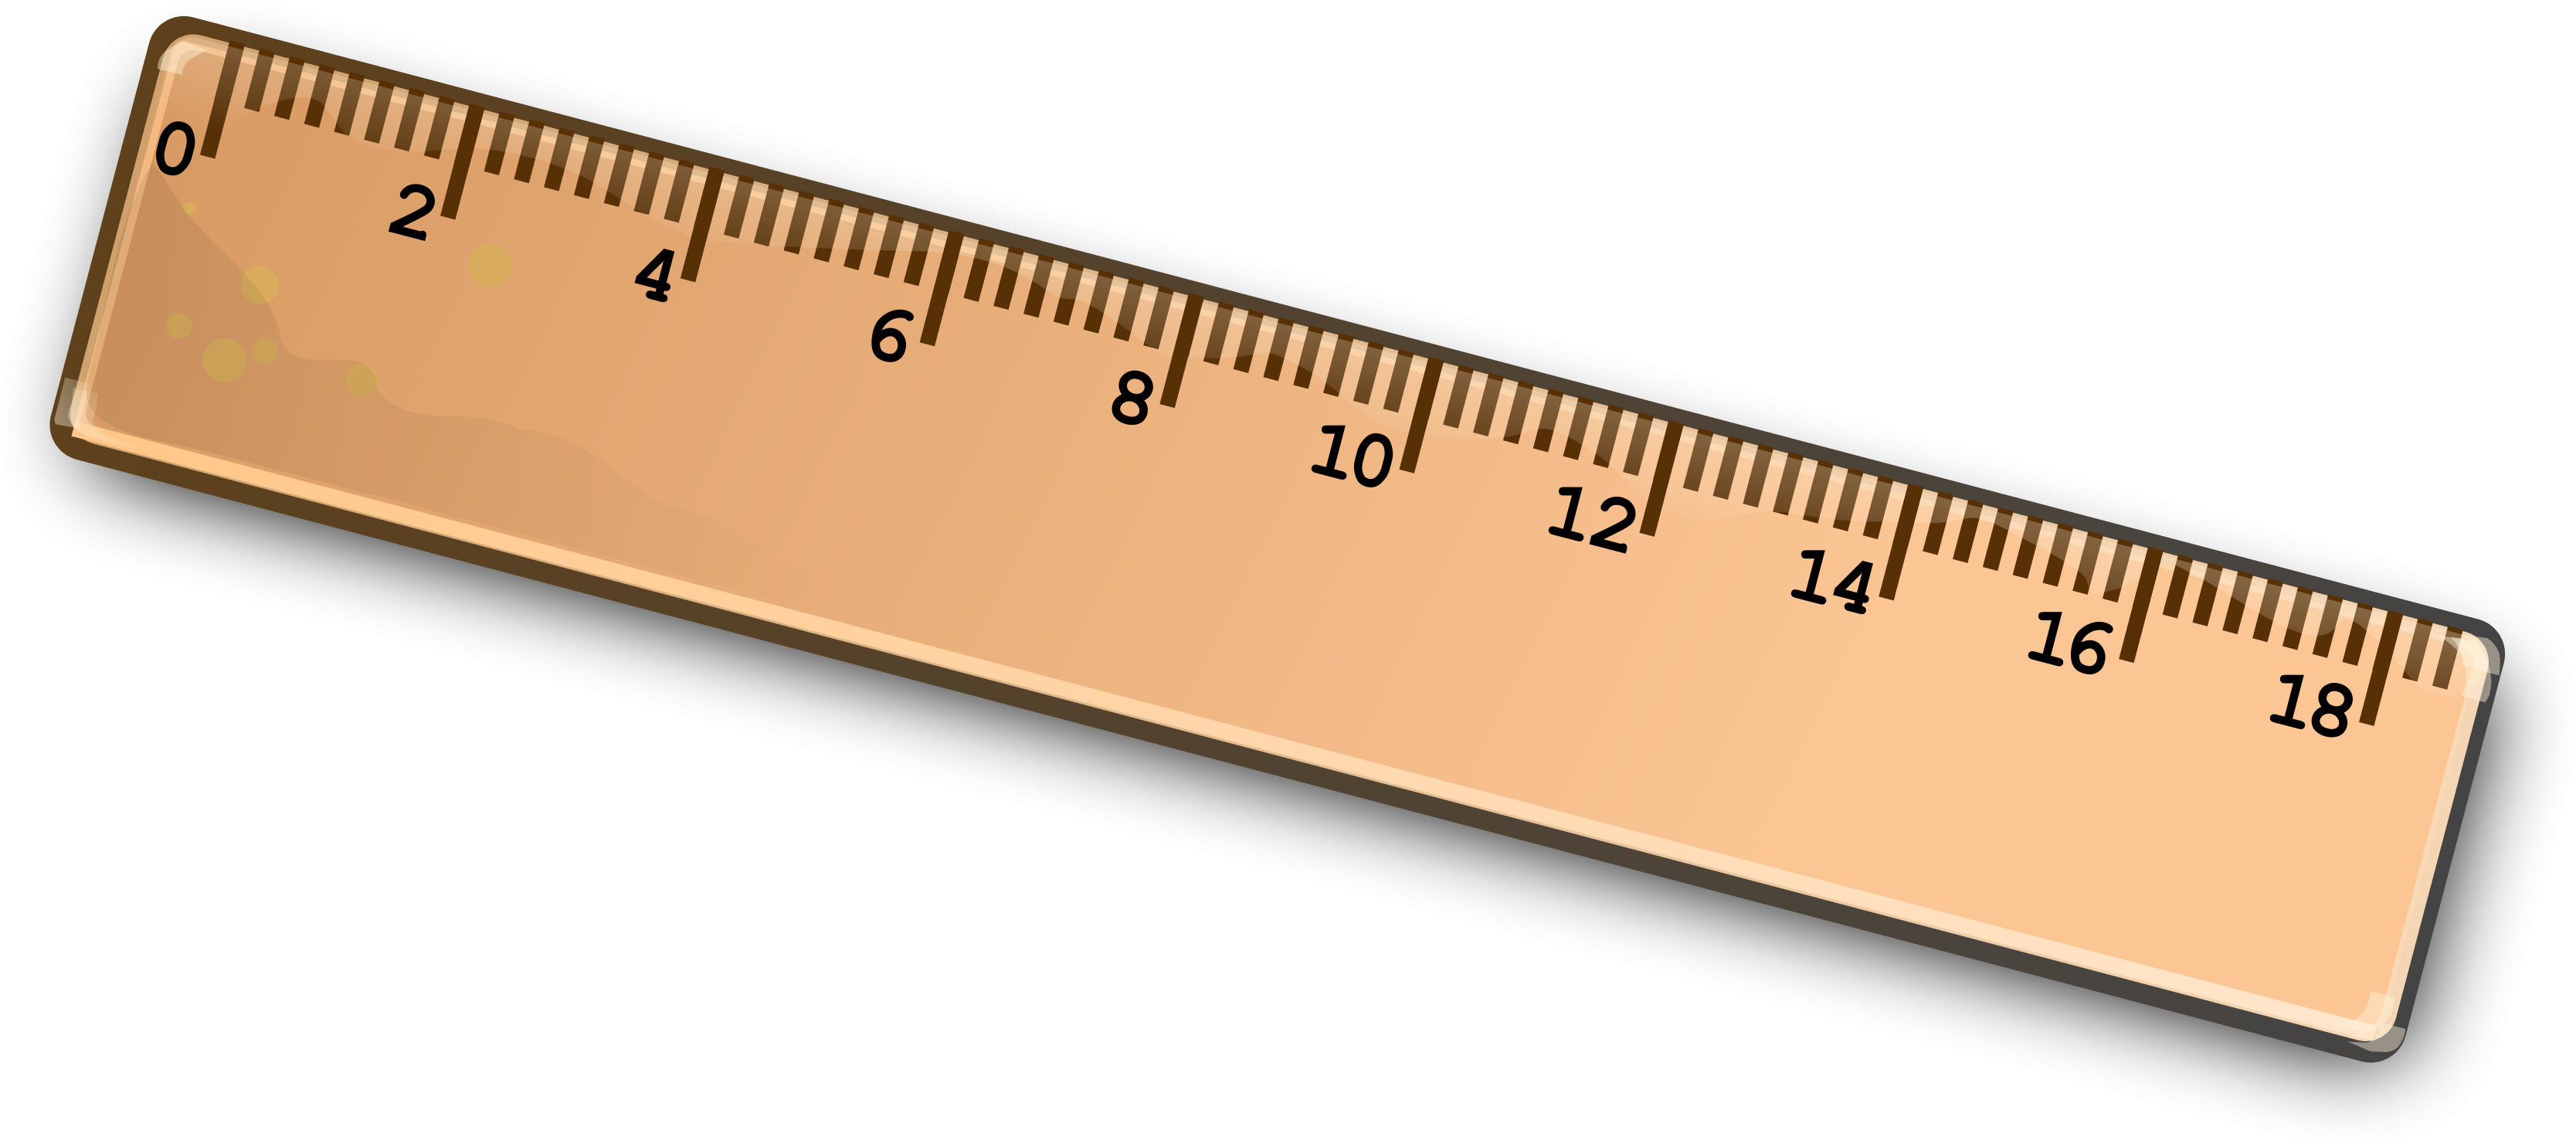 Clip art png download. Ruler clipart scale ruler